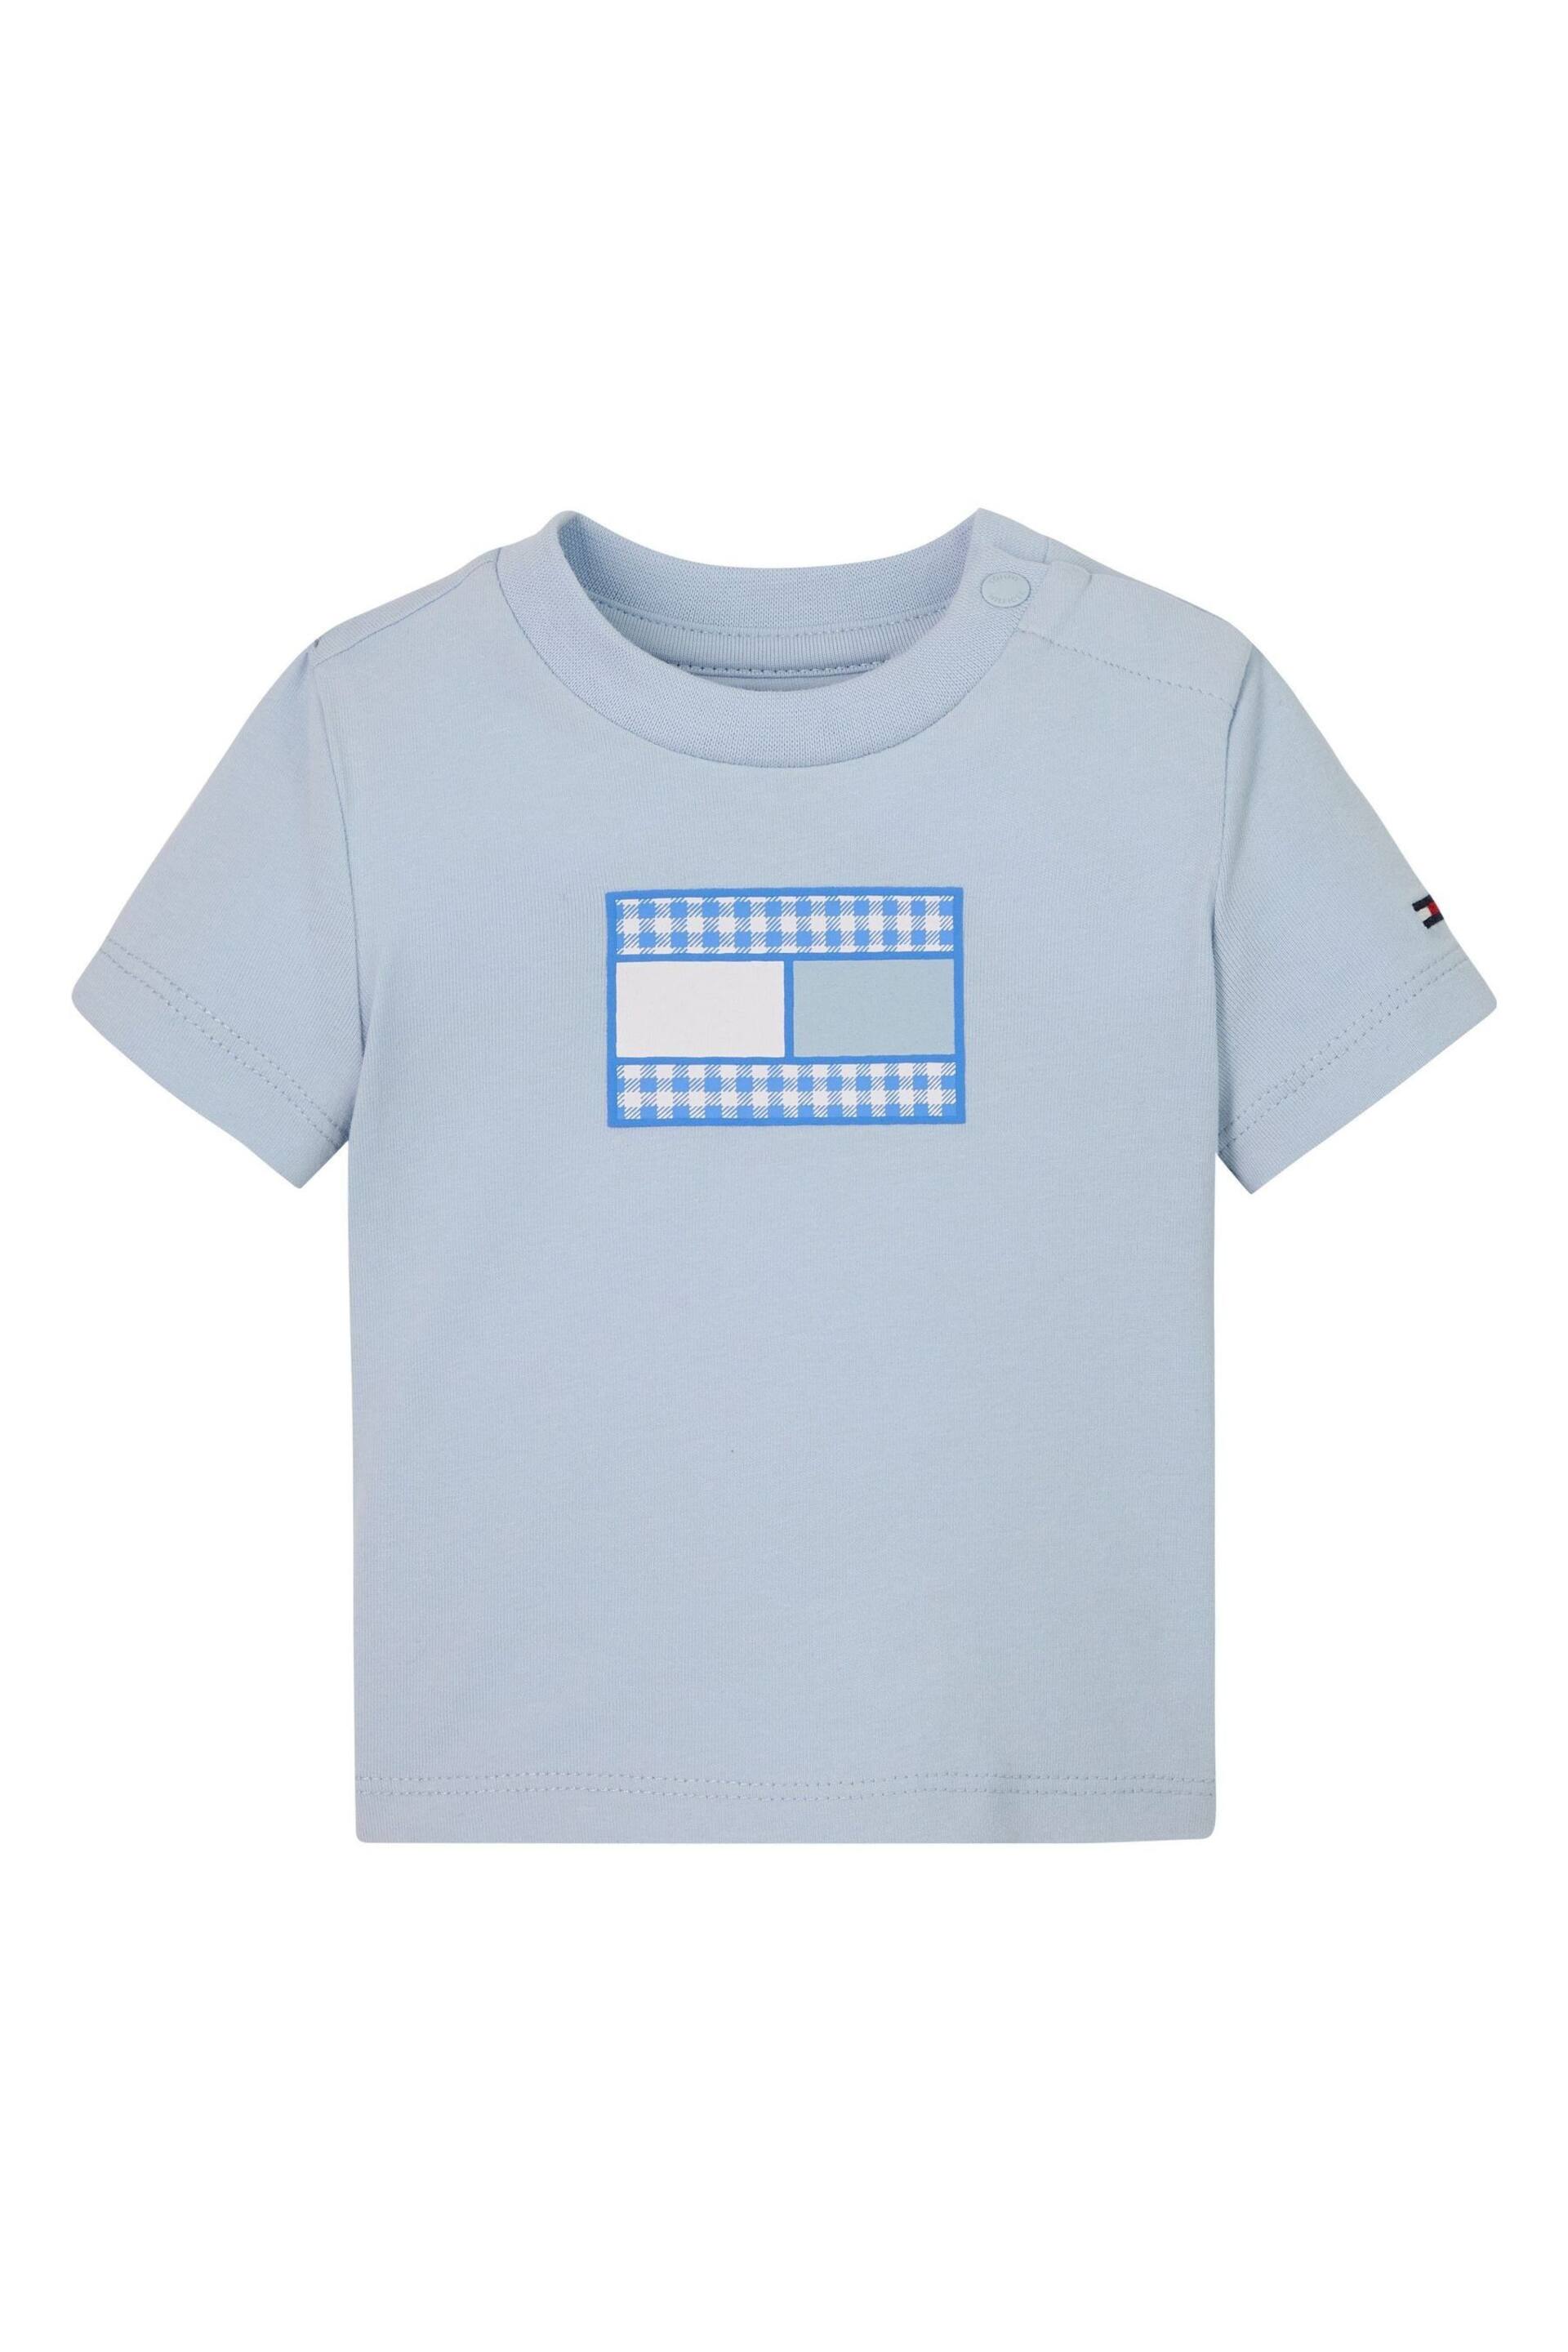 Tommy Hilfiger Baby Blue Gingham Flag T-Shirt - Image 1 of 3